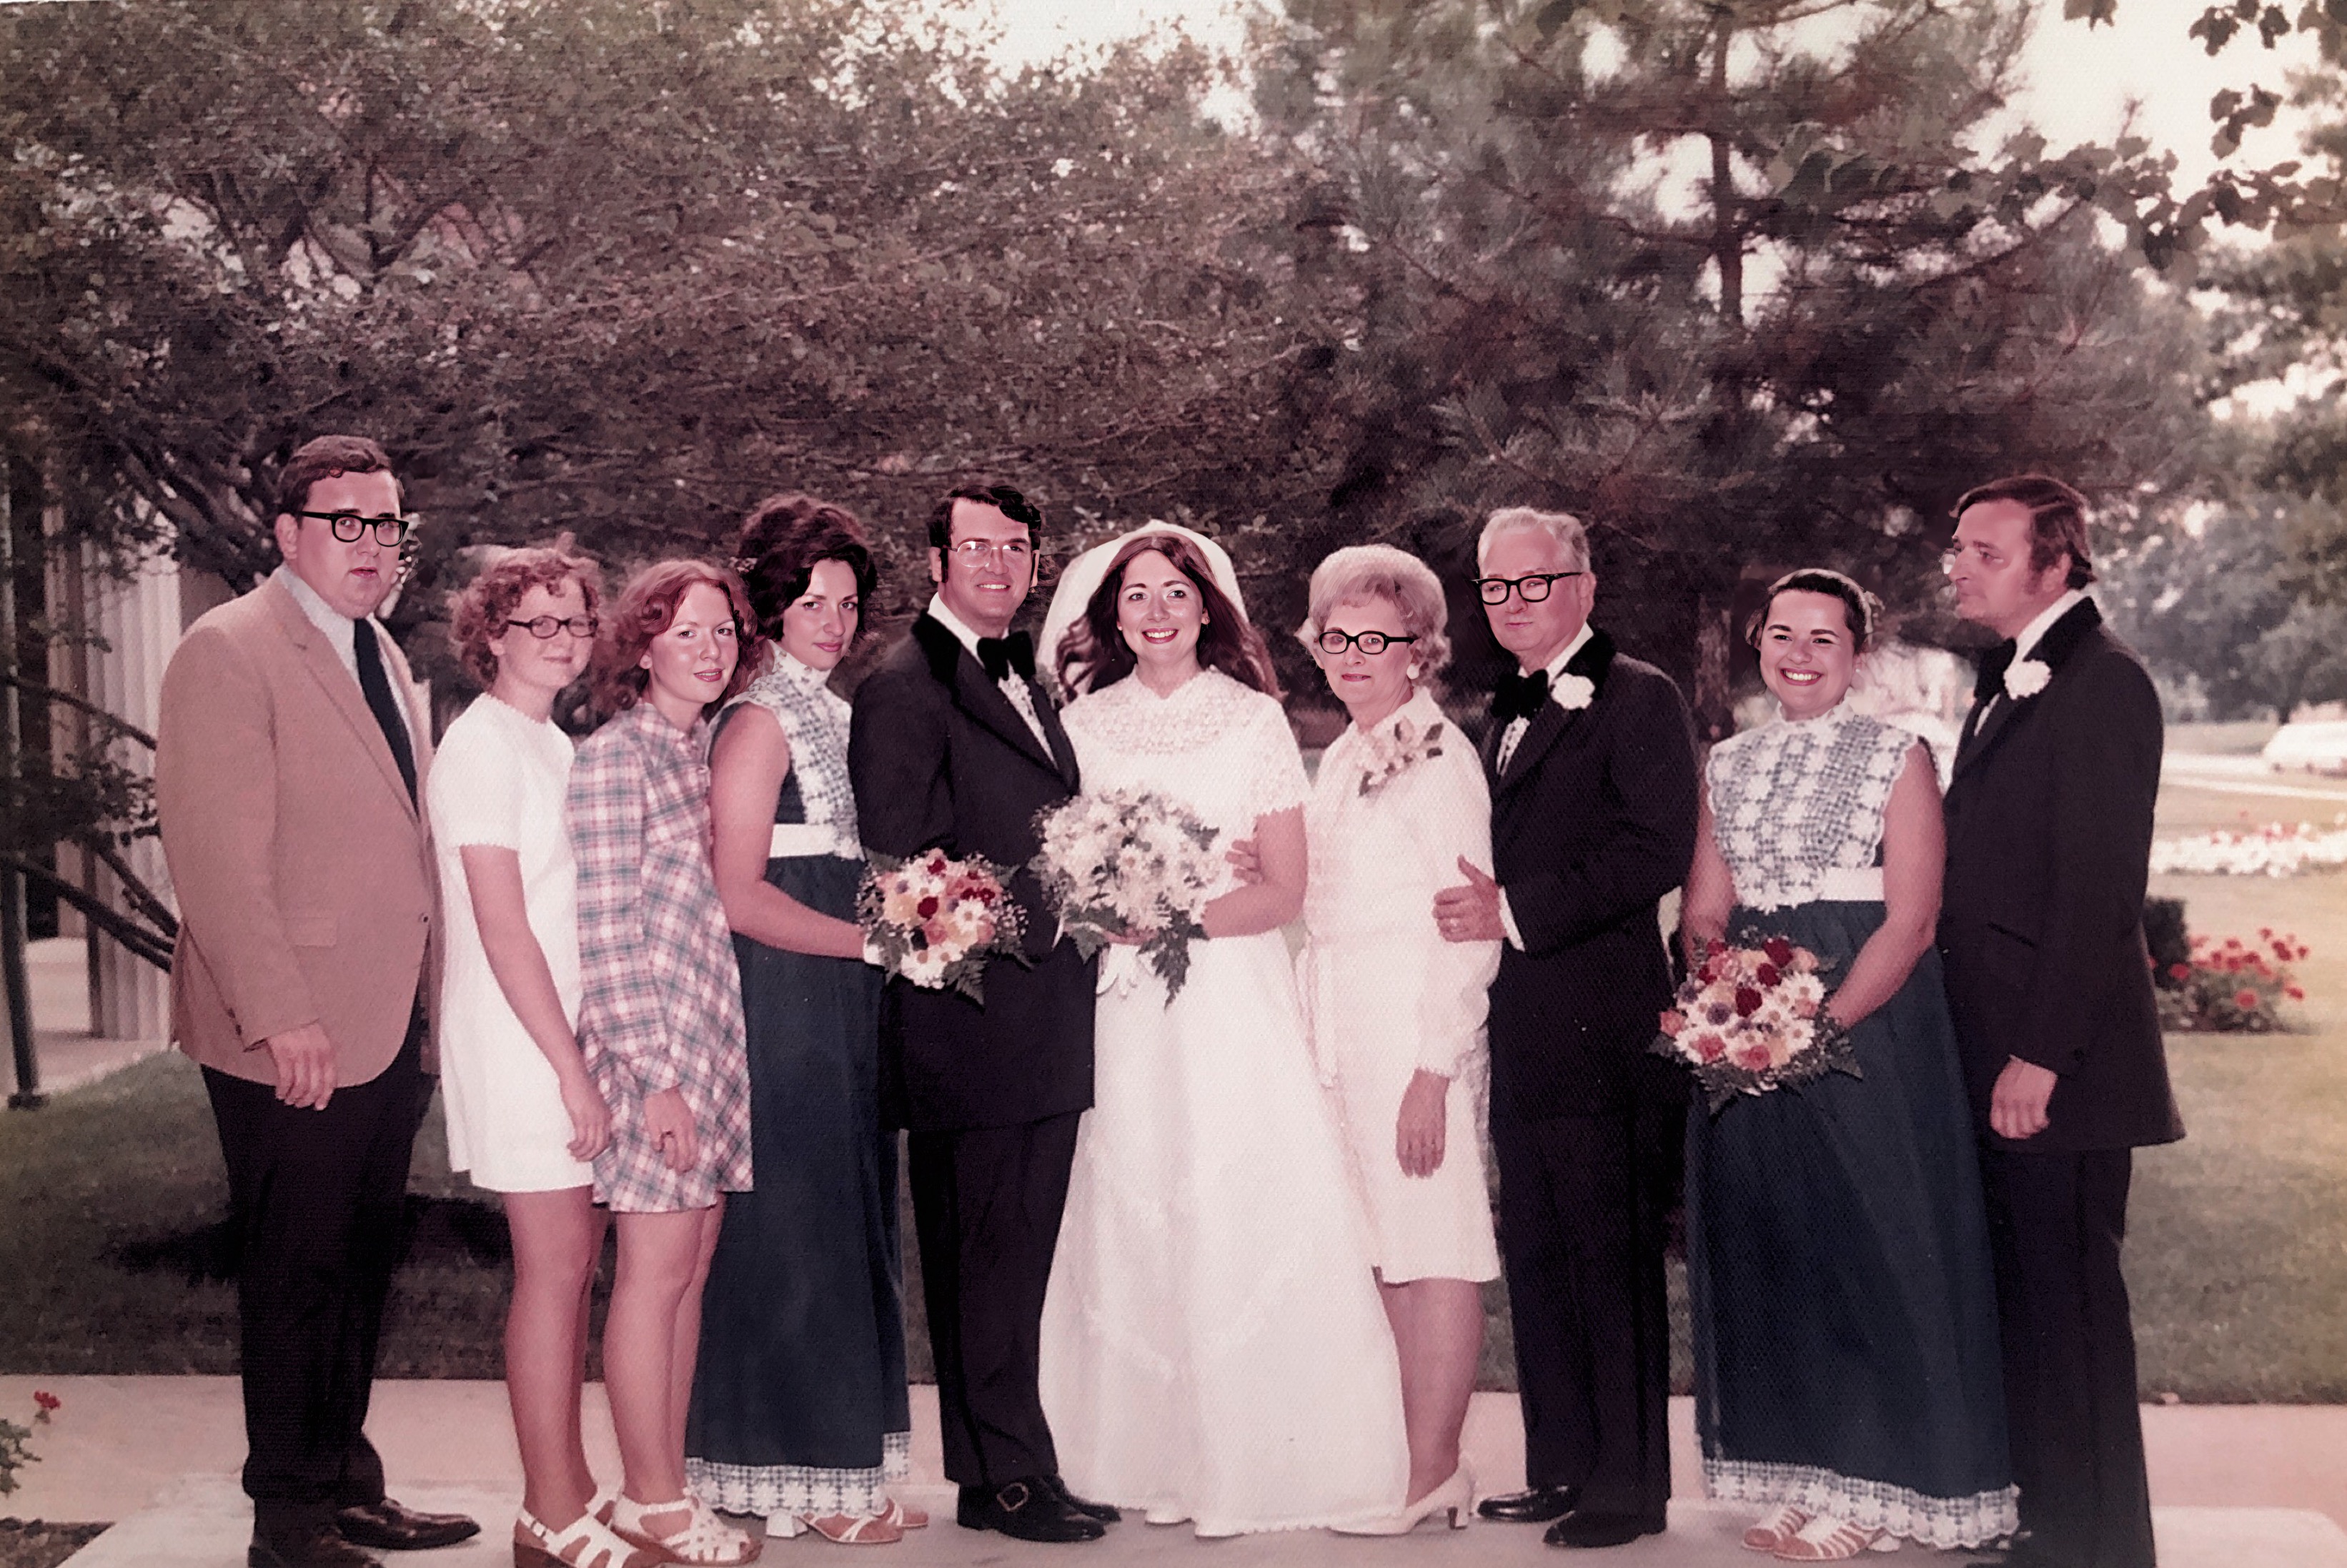 Wedding day. 8-19-1972